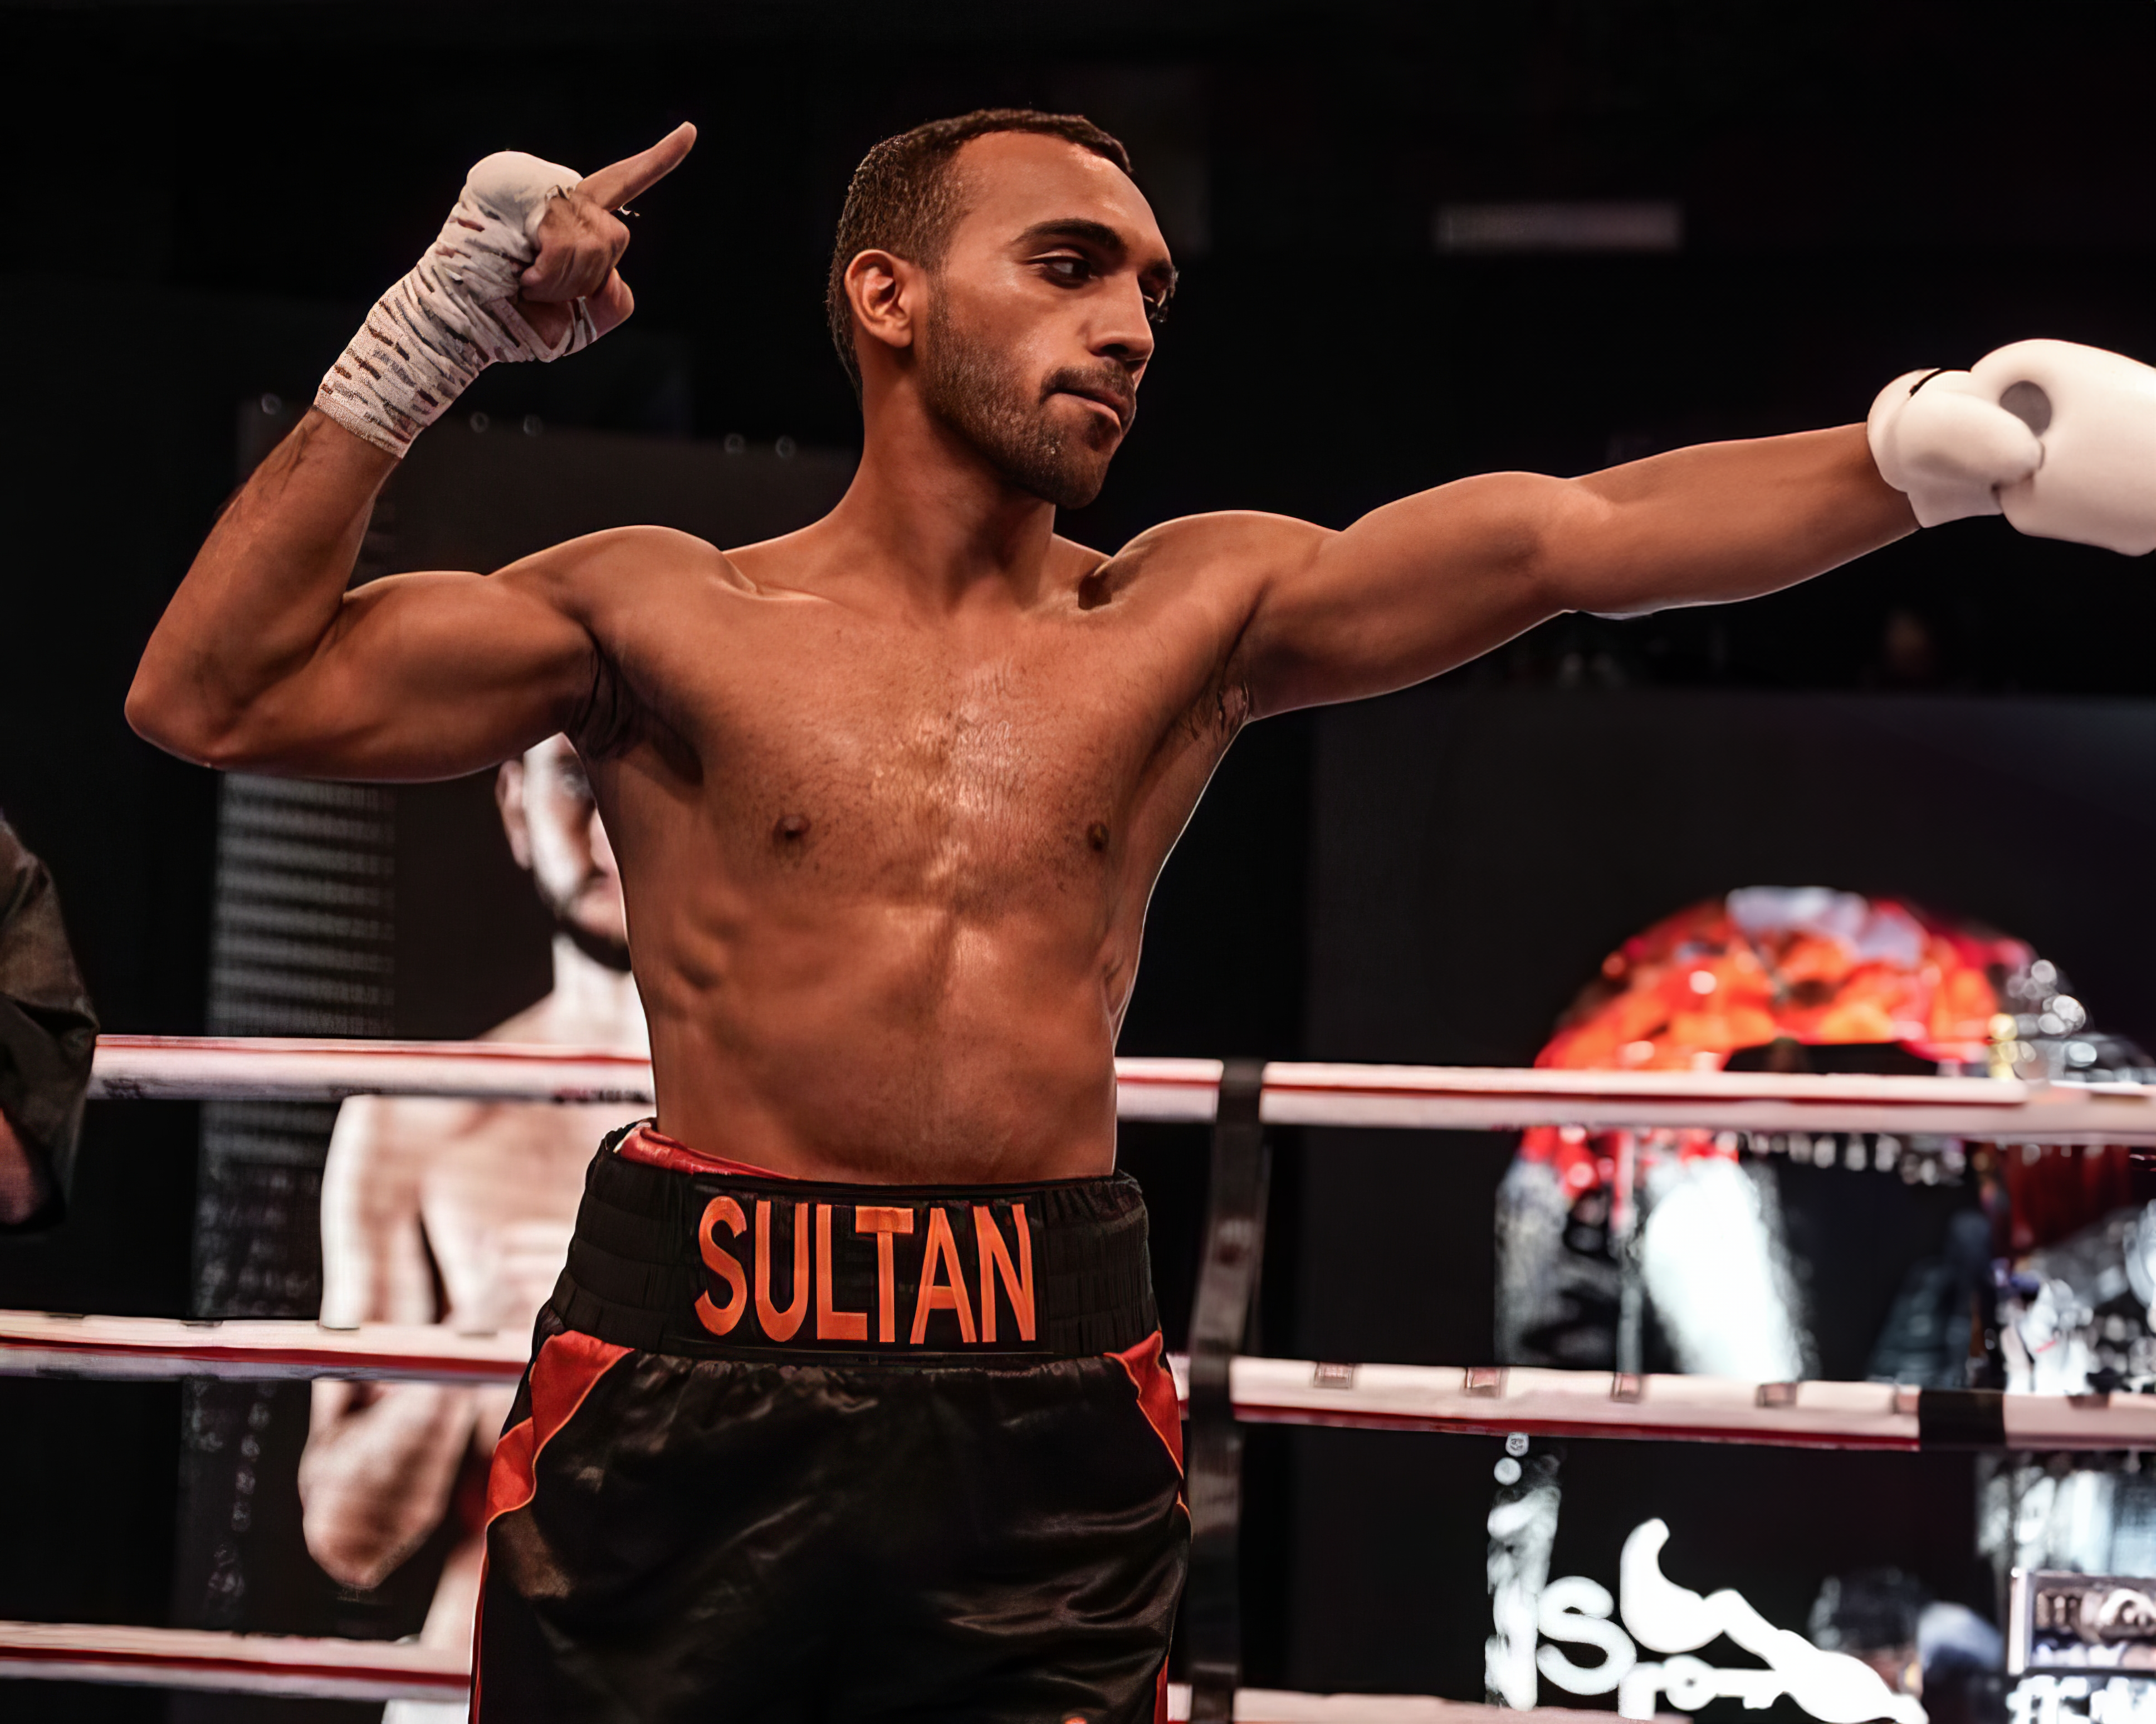 Unbeaten prospect Sultan Al Nuaimi aims to take career ‘to the next level’ vs Eliu Canario